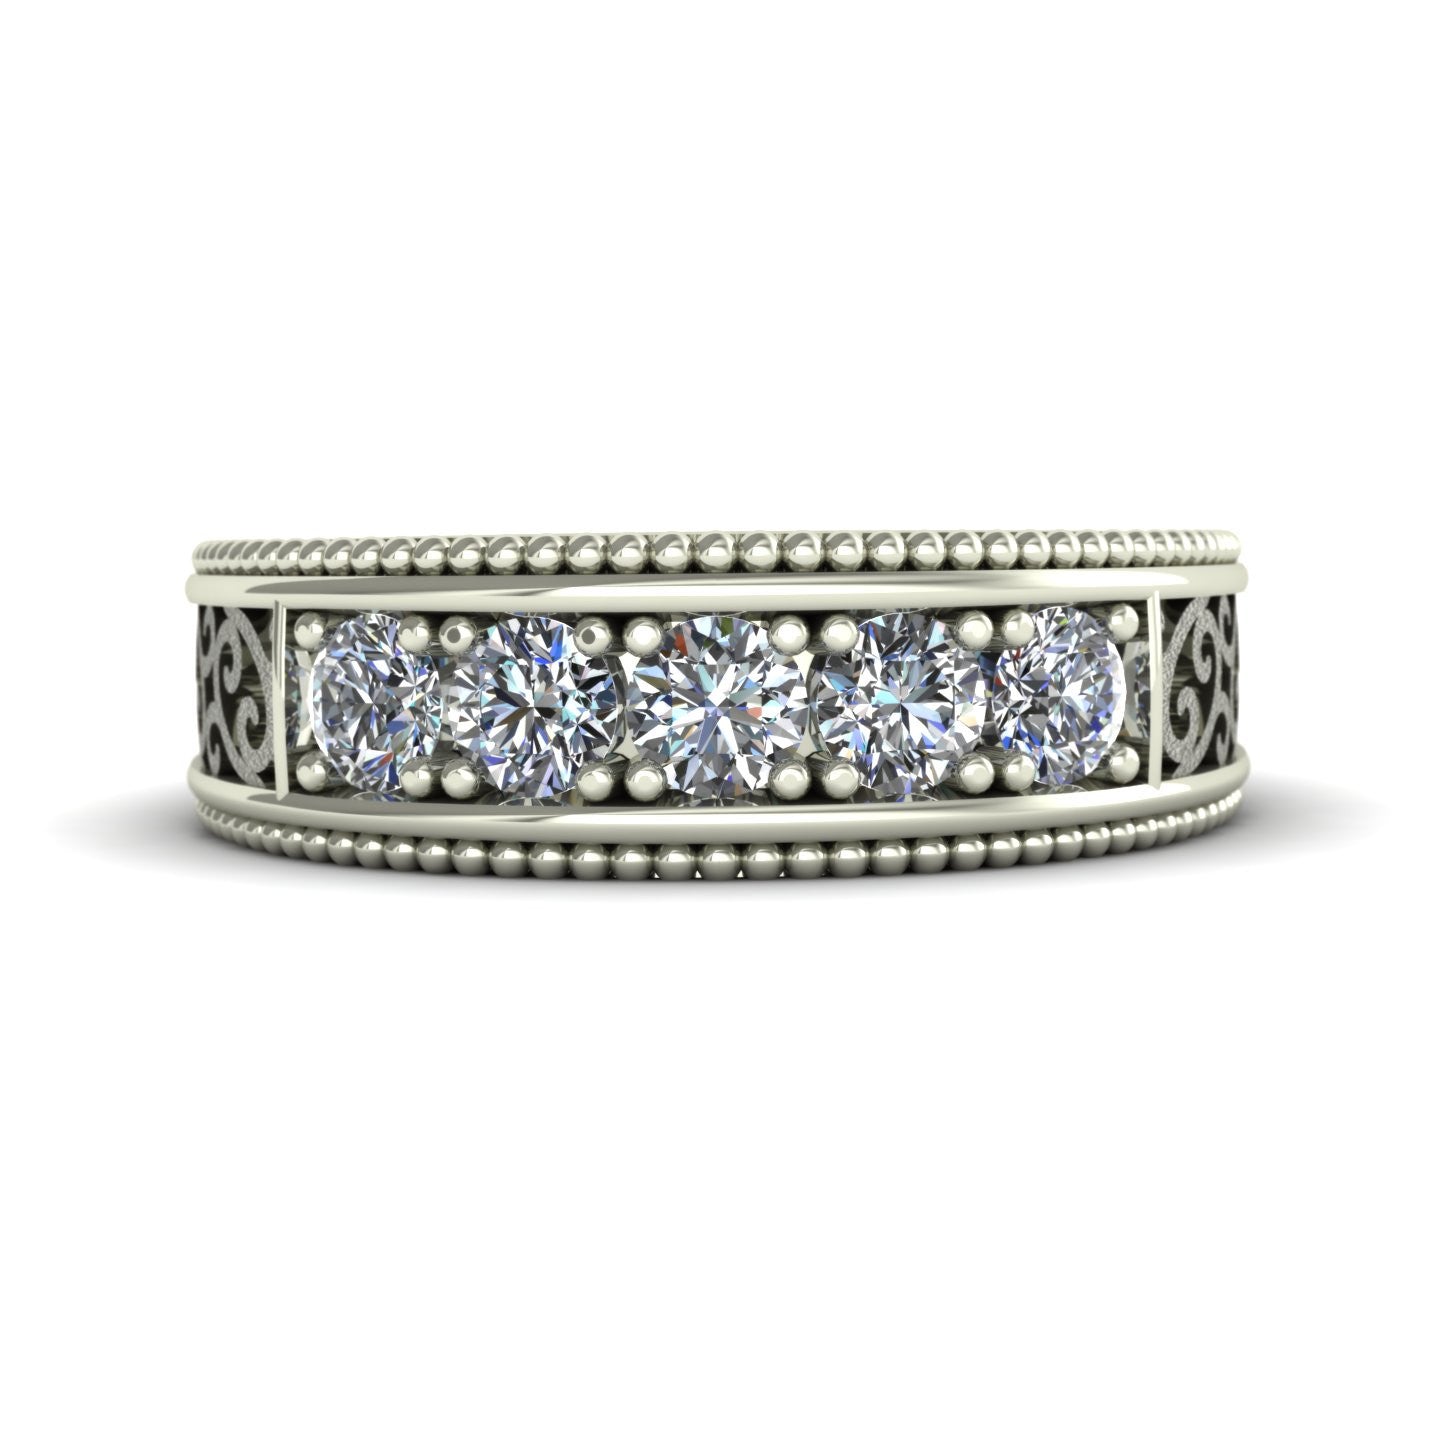 Sandblasted Scroll Filigree one carat Diamond Wedding Band in 14k White Gold - Charles Babb Designs - top view